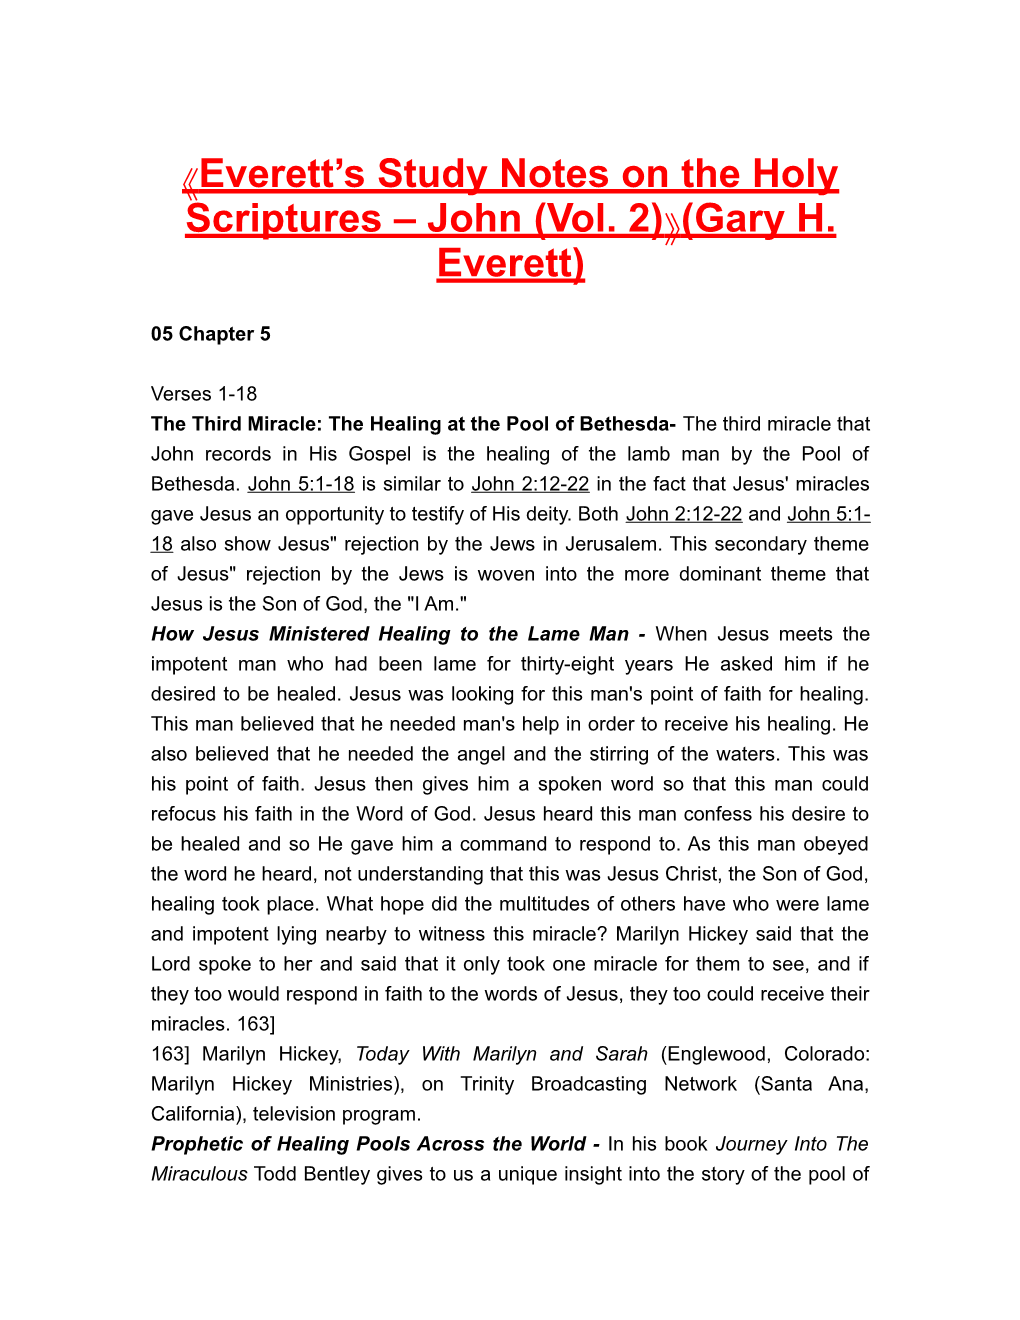 Everett S Study Notes on the Holy Scriptures John (Vol. 2) (Gary H. Everett)